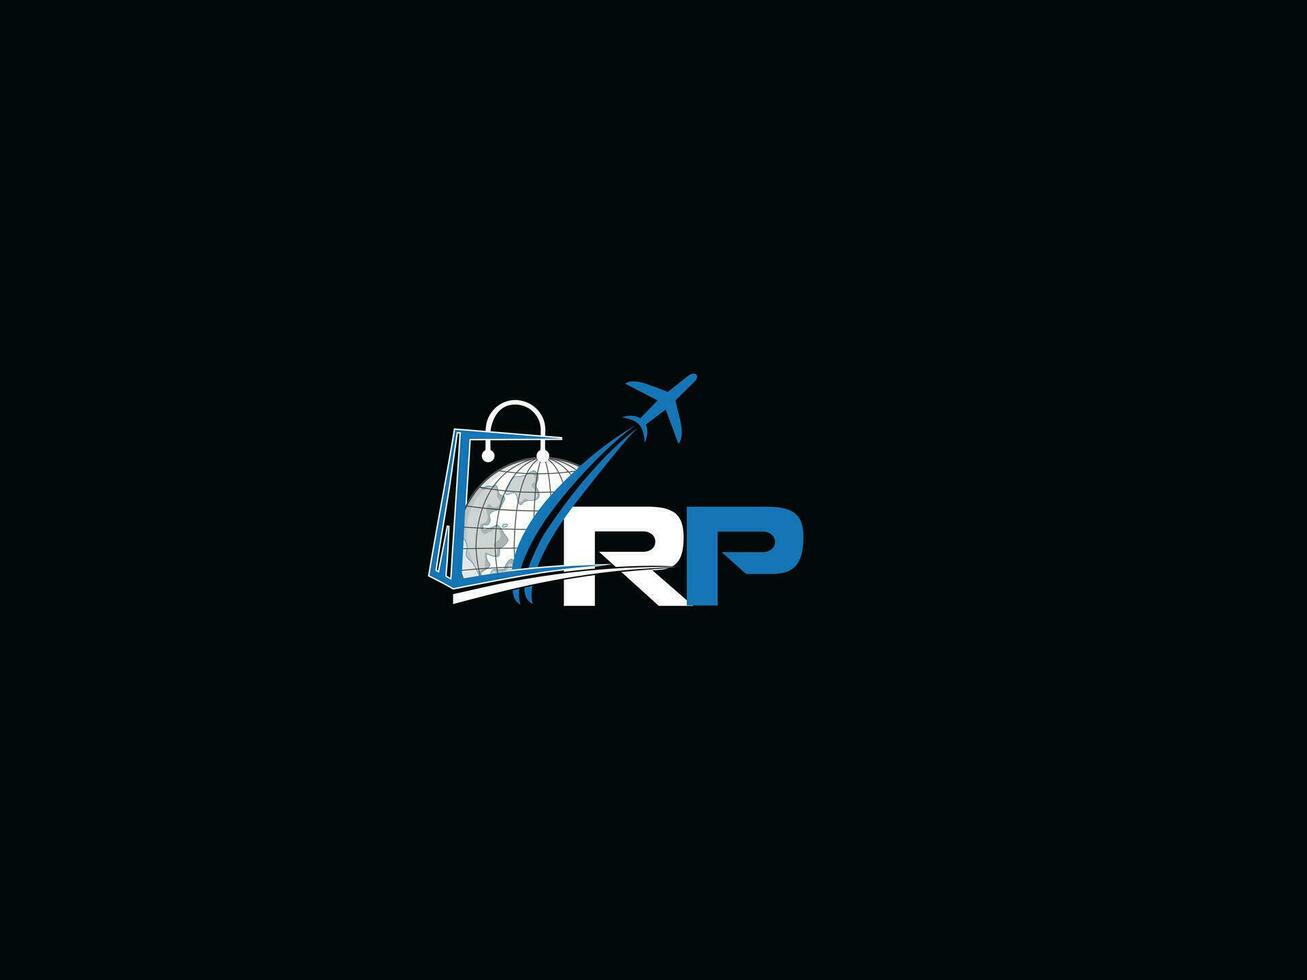 Rp Initial Travel Logo, Creative Global RP Traveling Logo Letter Vector